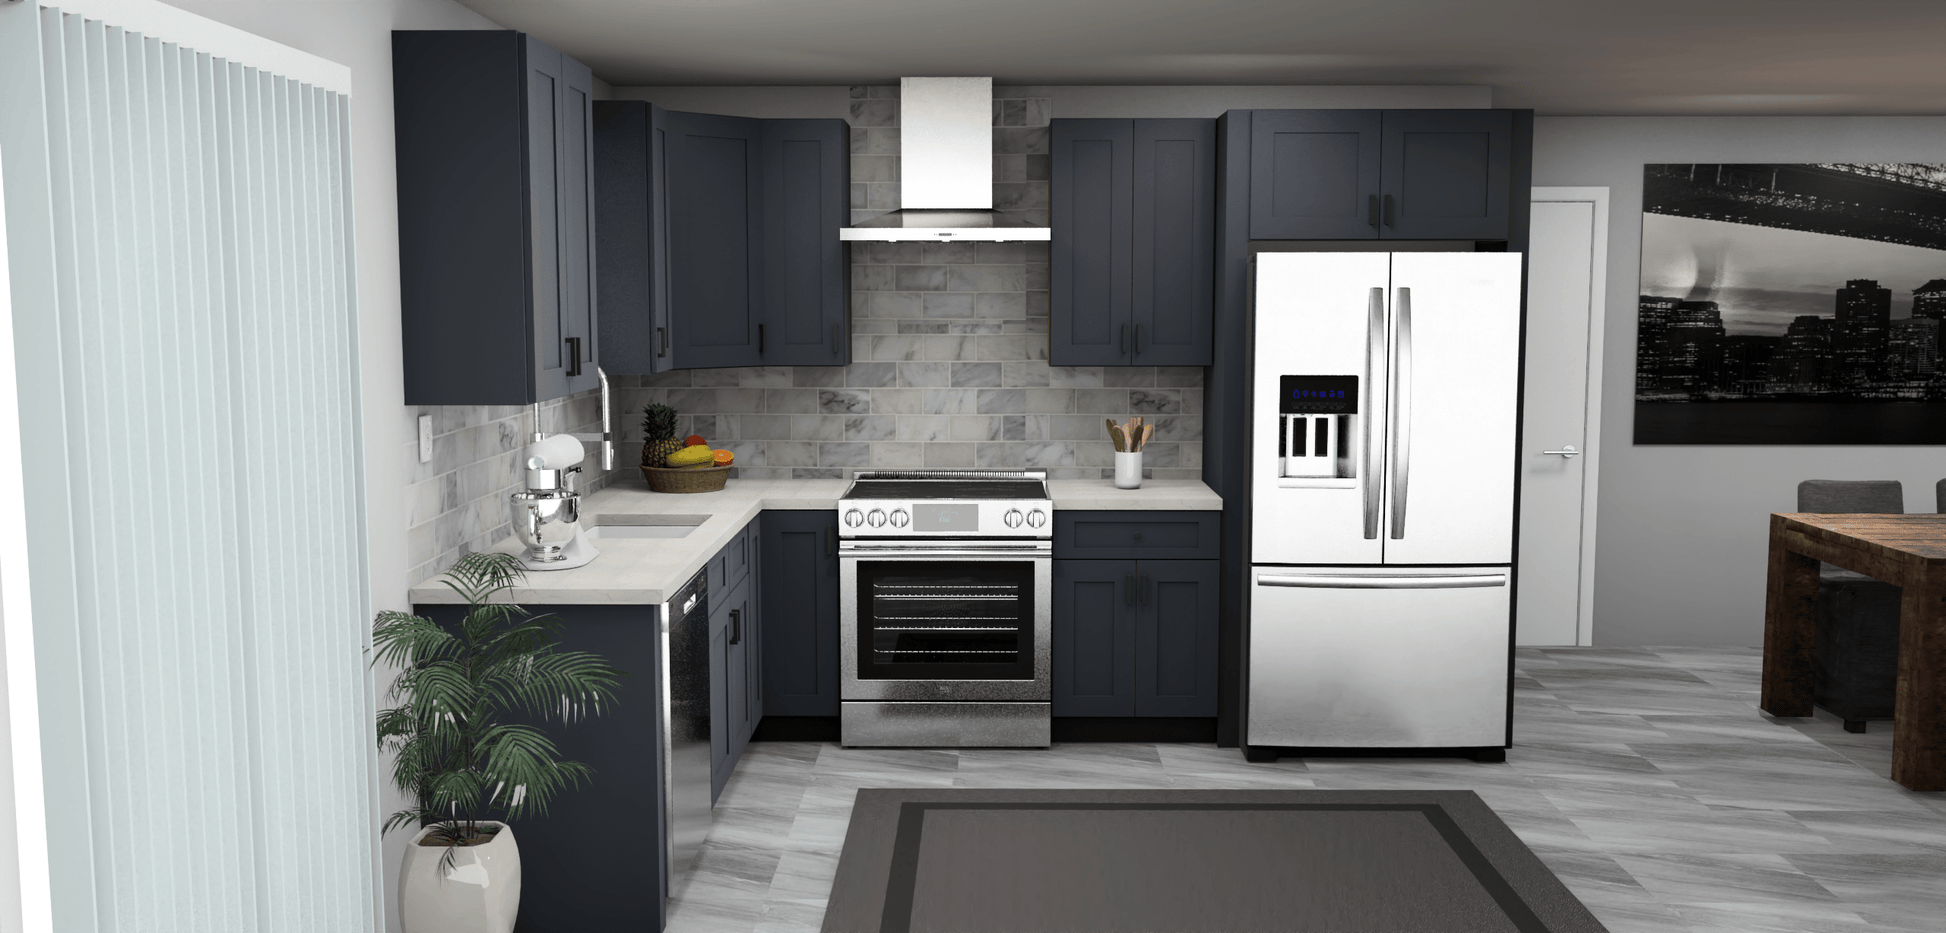 Fabuwood Allure Galaxy Indigo 8 x 11 L Shaped Kitchen Front Layout Photo